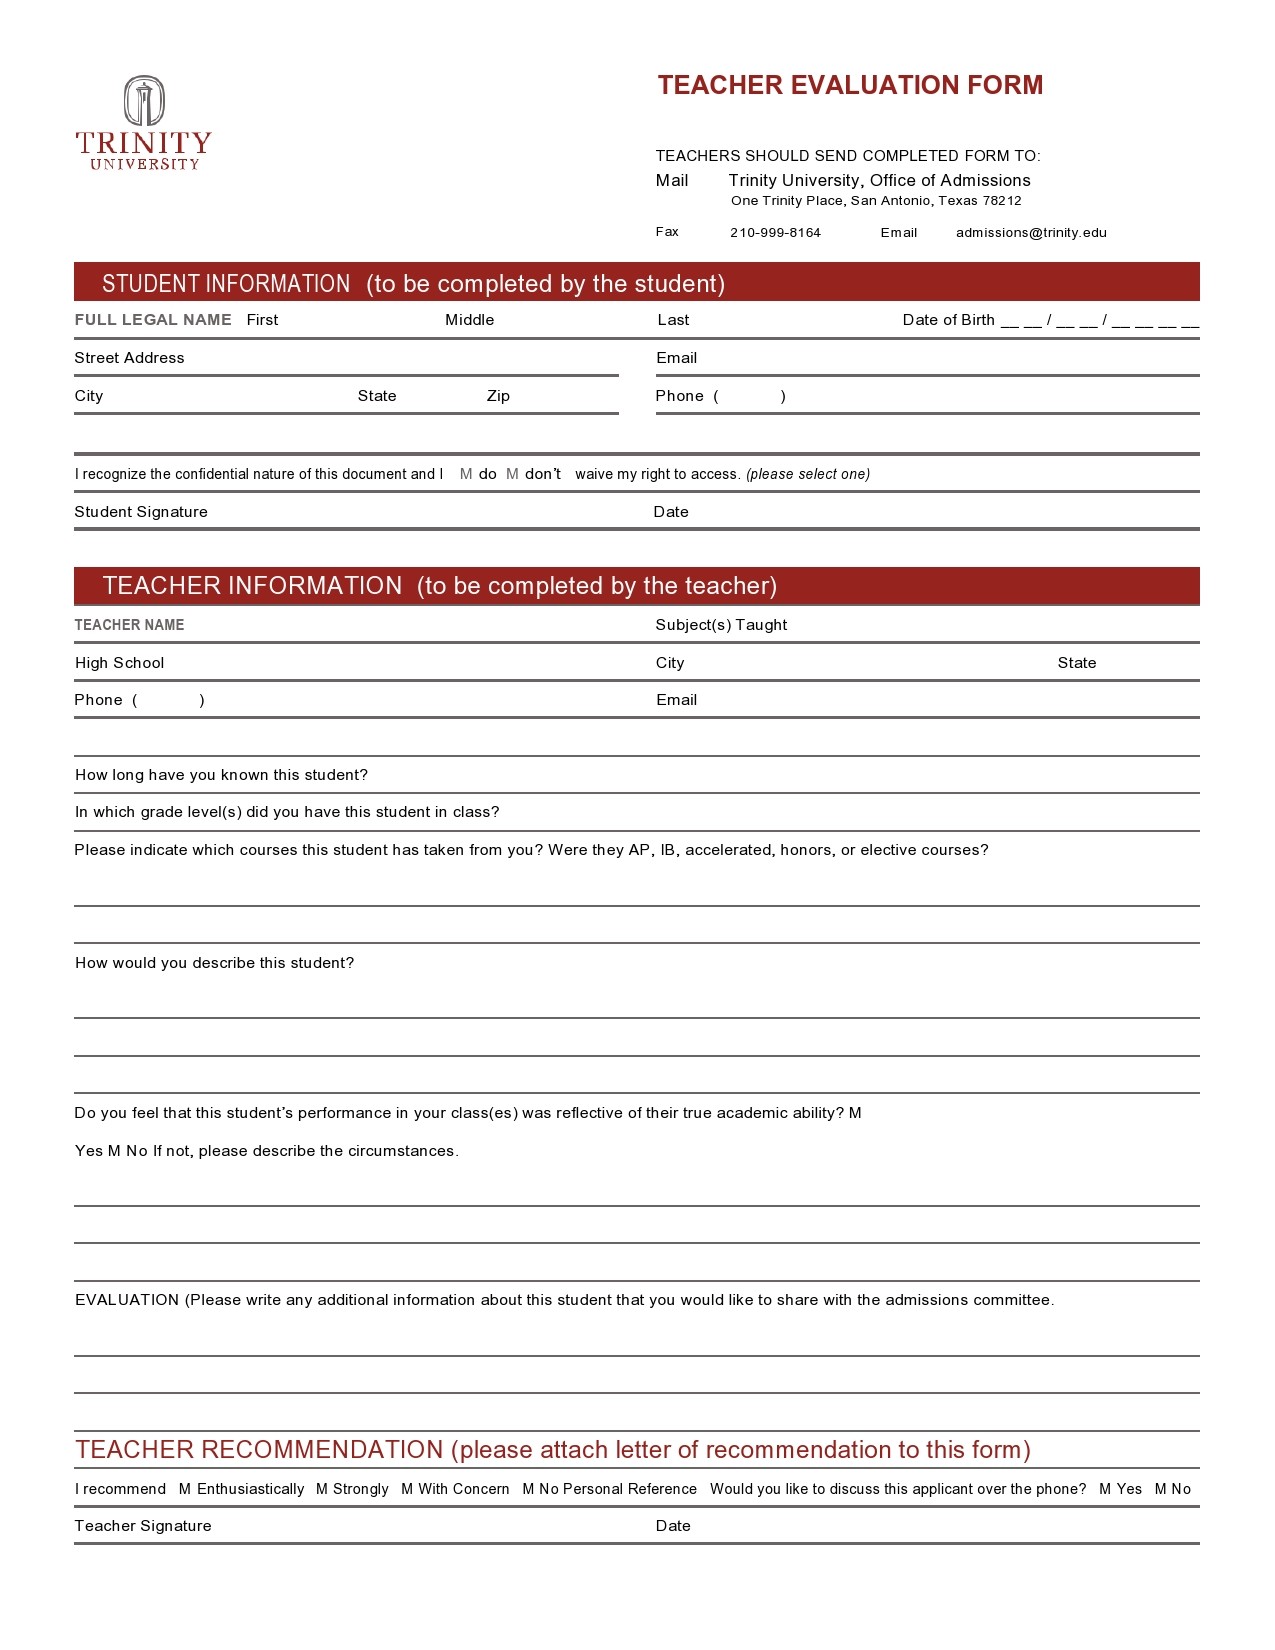 Free teacher evaluation form 05